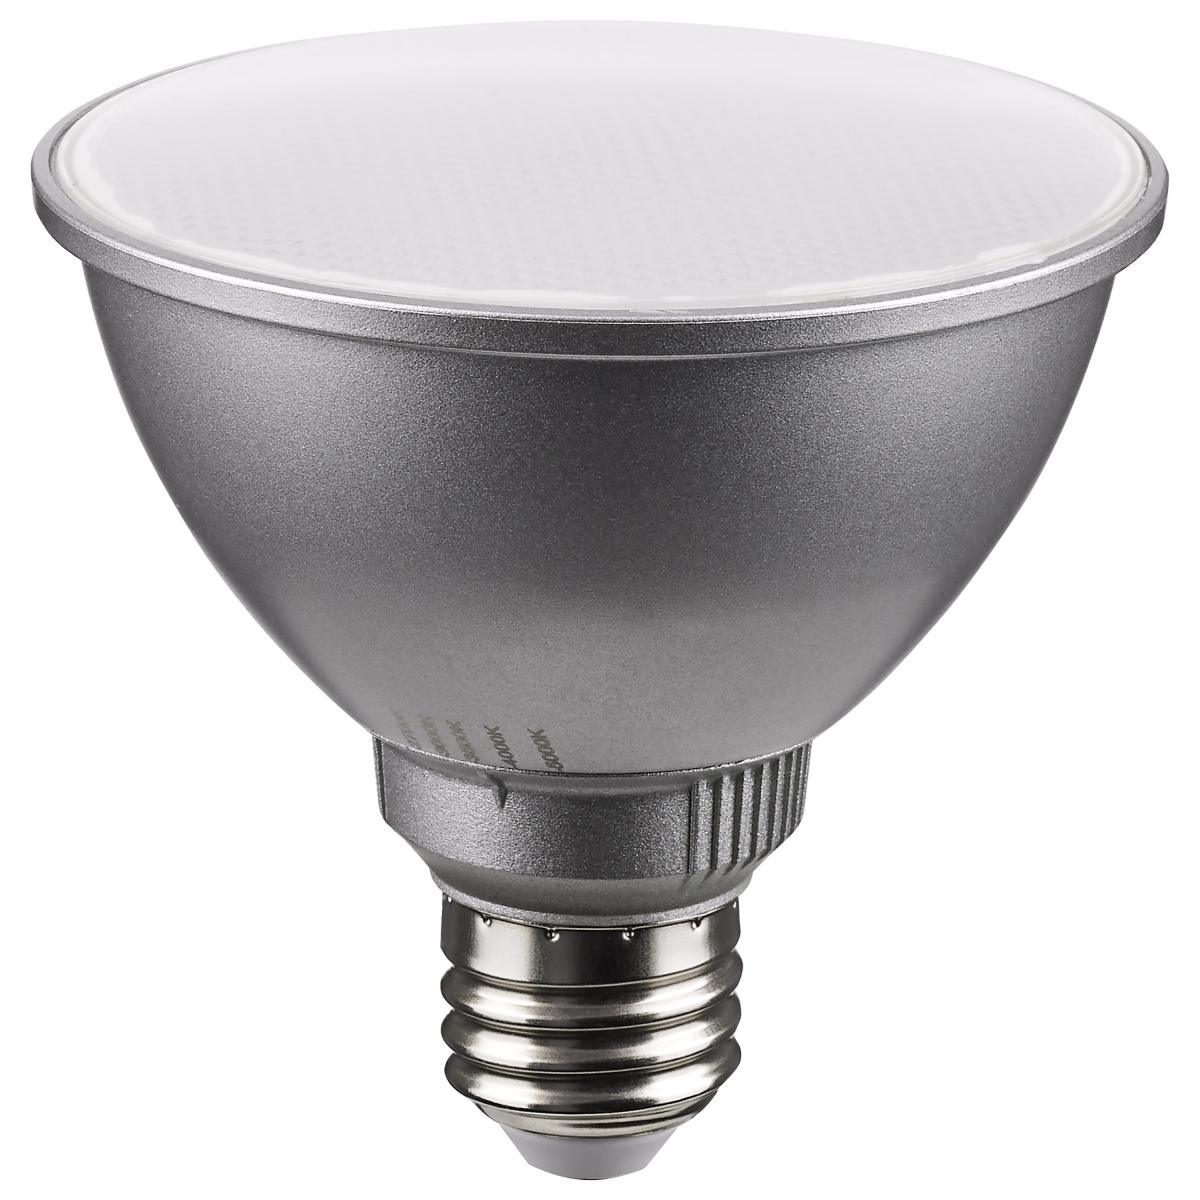 PAR30 Short Neck Reflector LED Bulb, 11 Watt, 1000 Lumens, Selectable CCT 2700K to 5000K, E26 Medium Base, 25 Deg. Spot